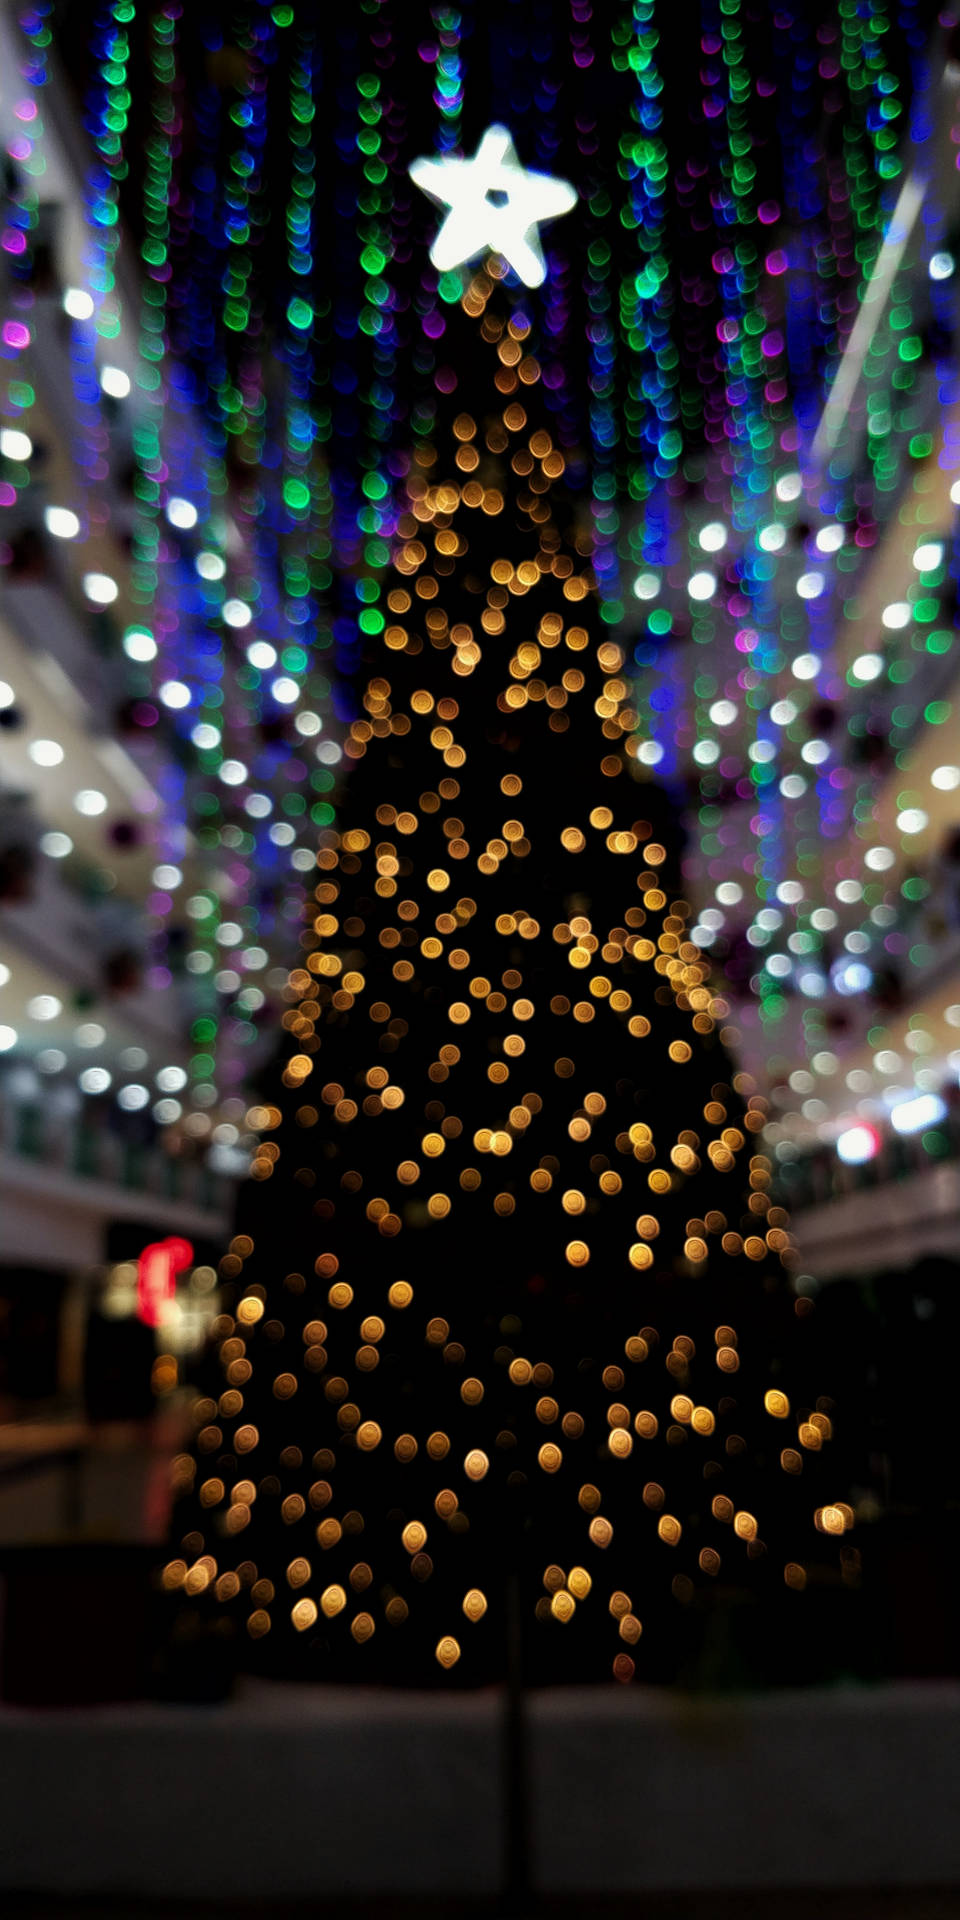 Mall Atrium Christmas Lights Blur